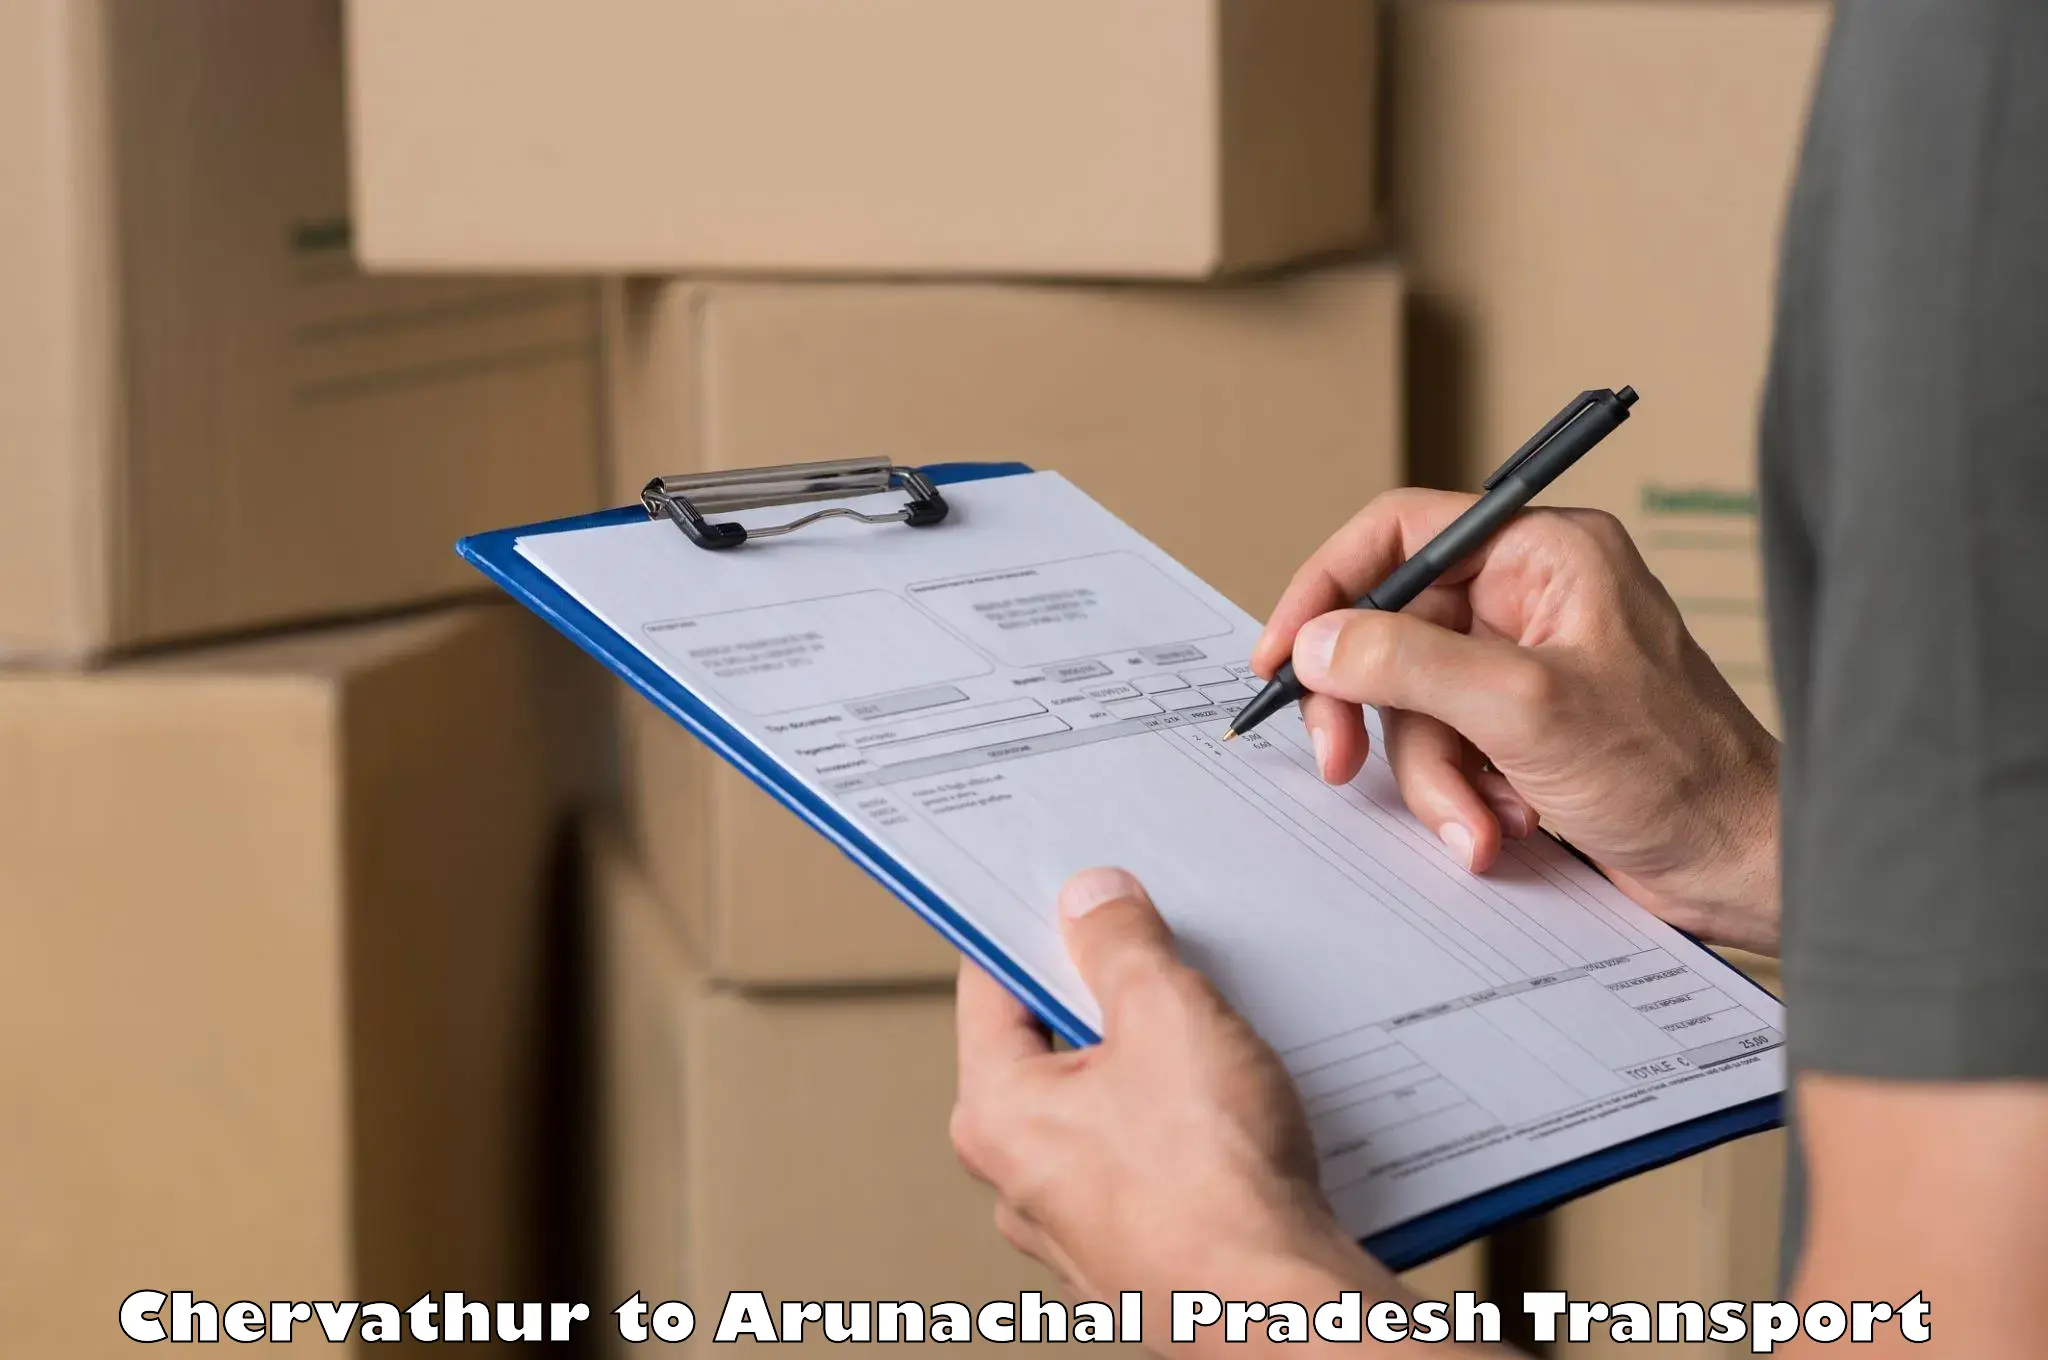 Truck transport companies in India Chervathur to Diyun